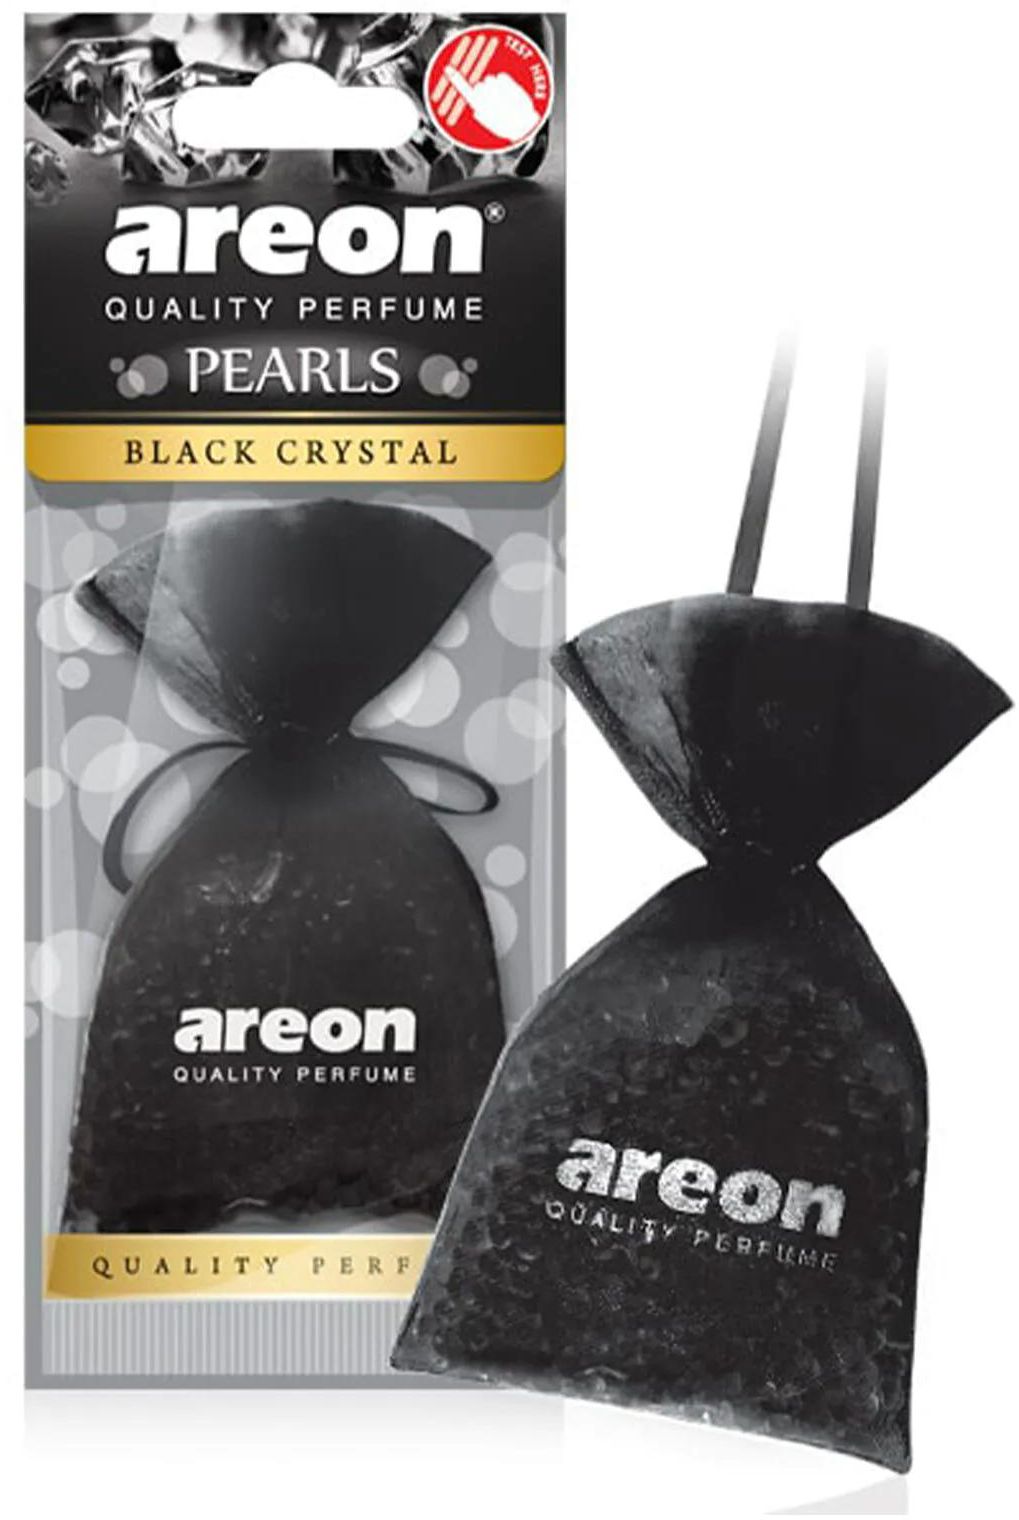 Areon pearls car air freshener black crystal